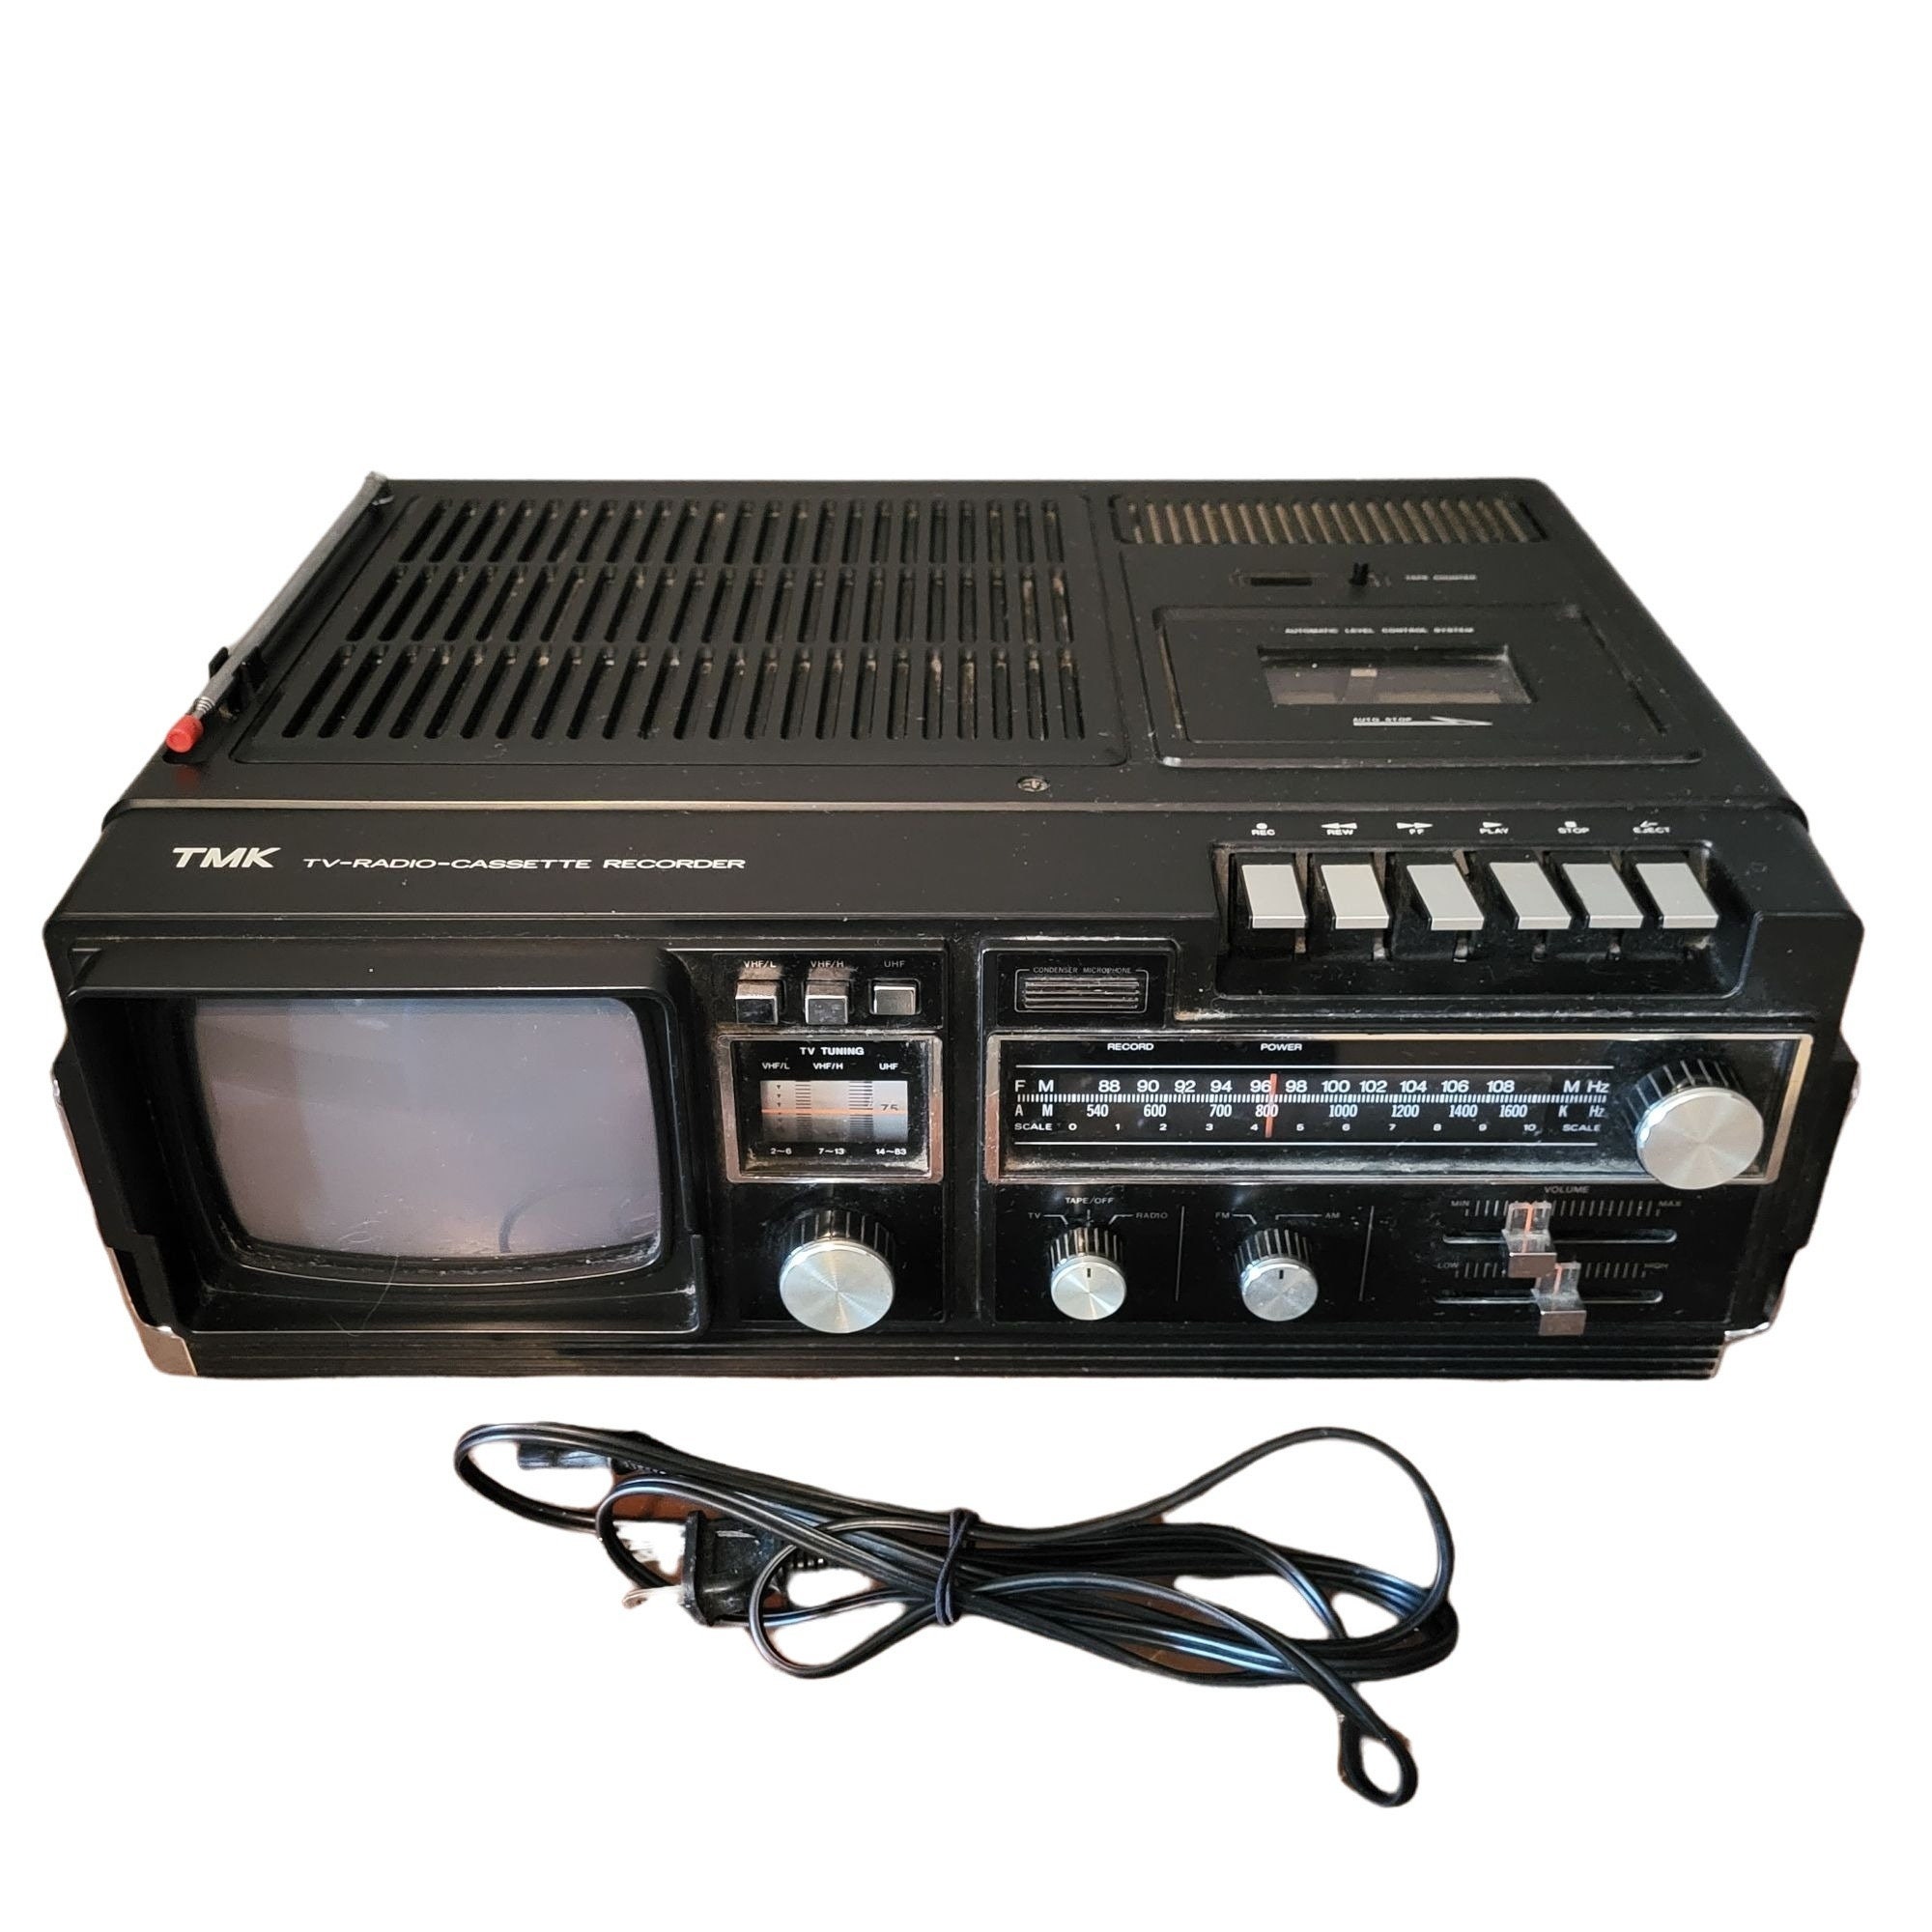 Portable TV Radio Cassette Recorder TMK 725 Vintage 1982 WORKS - Etsy  Australia